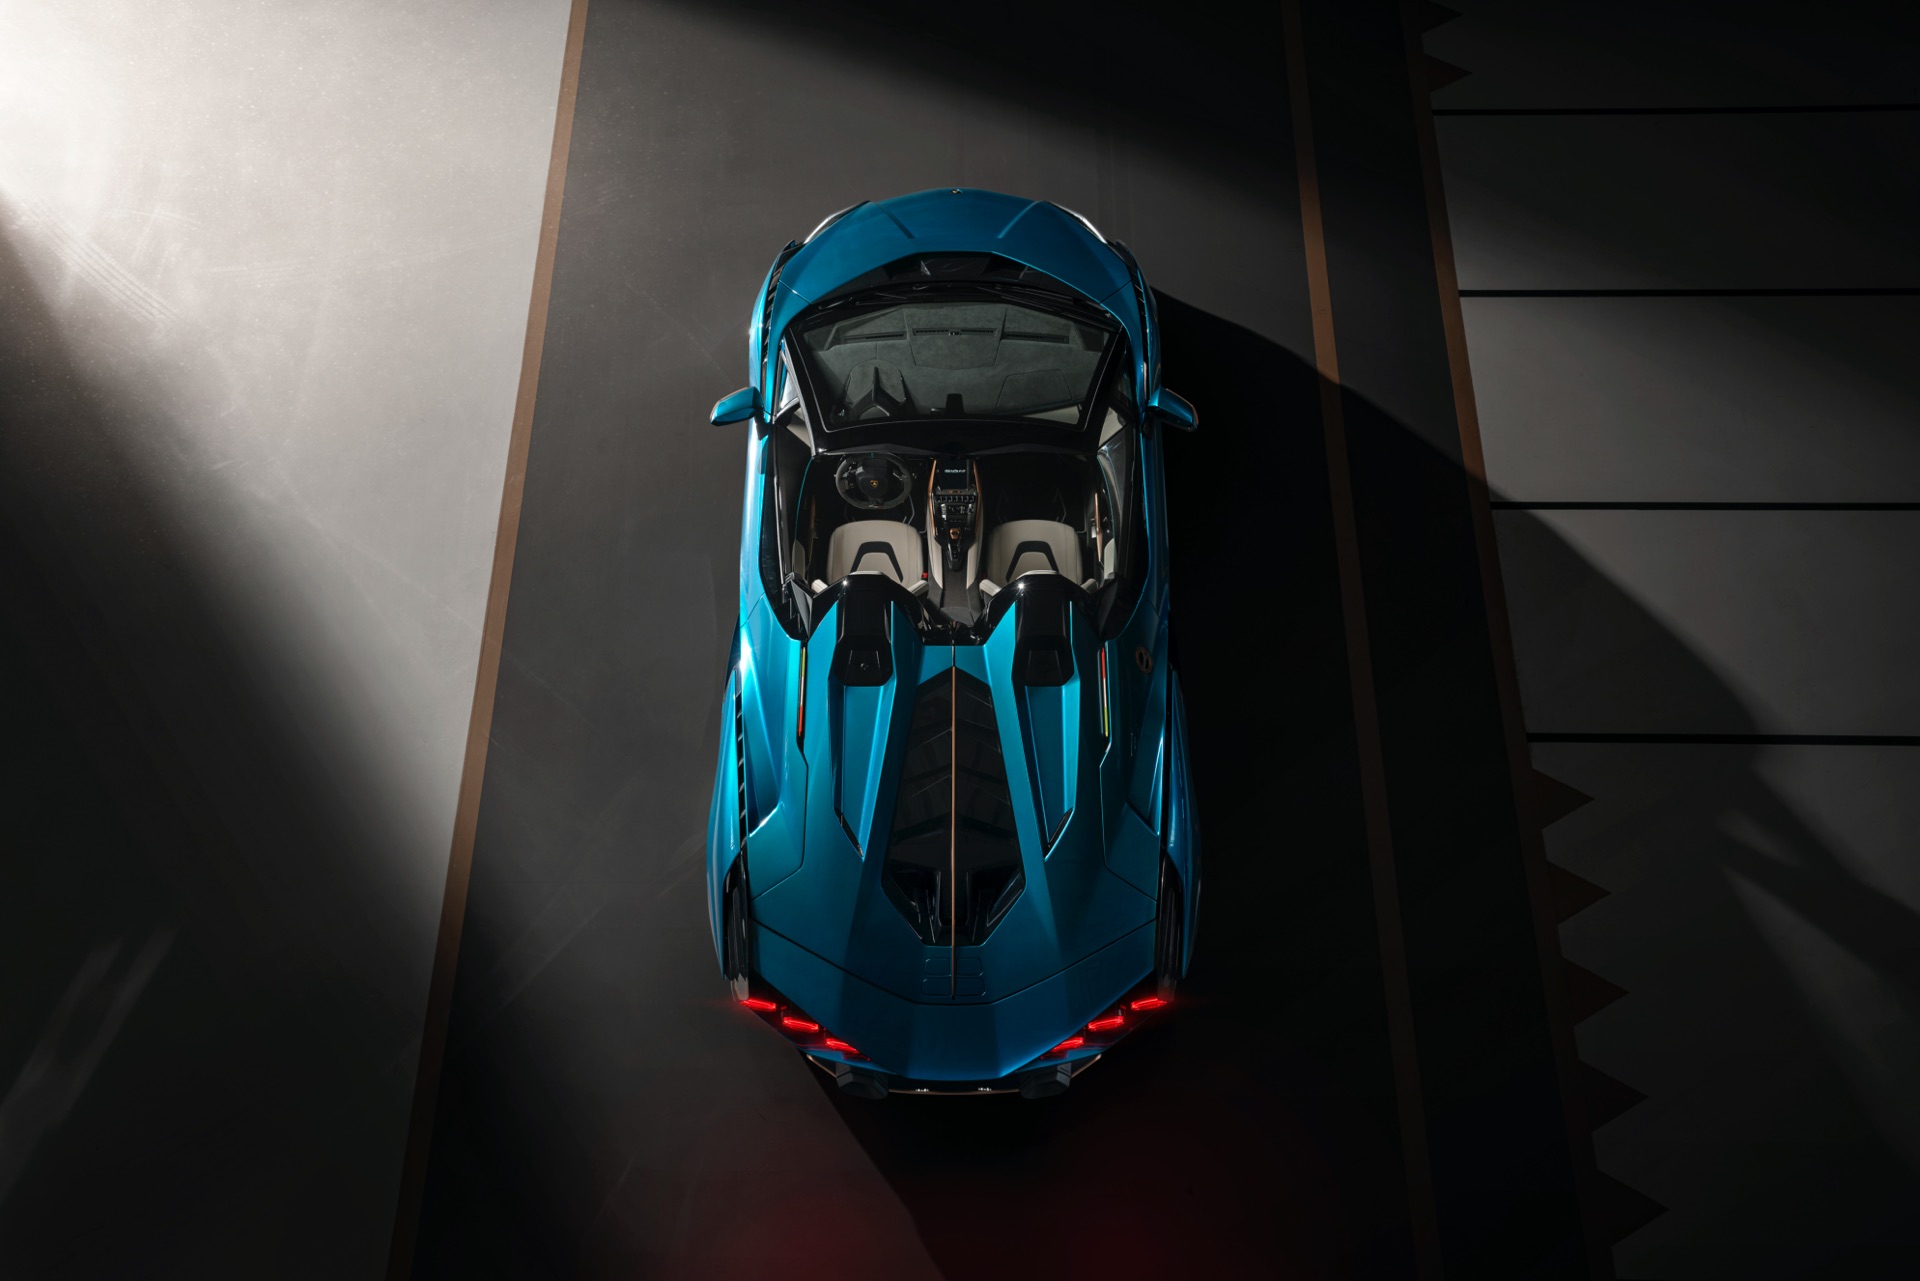 Lamborghini Sian Roadster